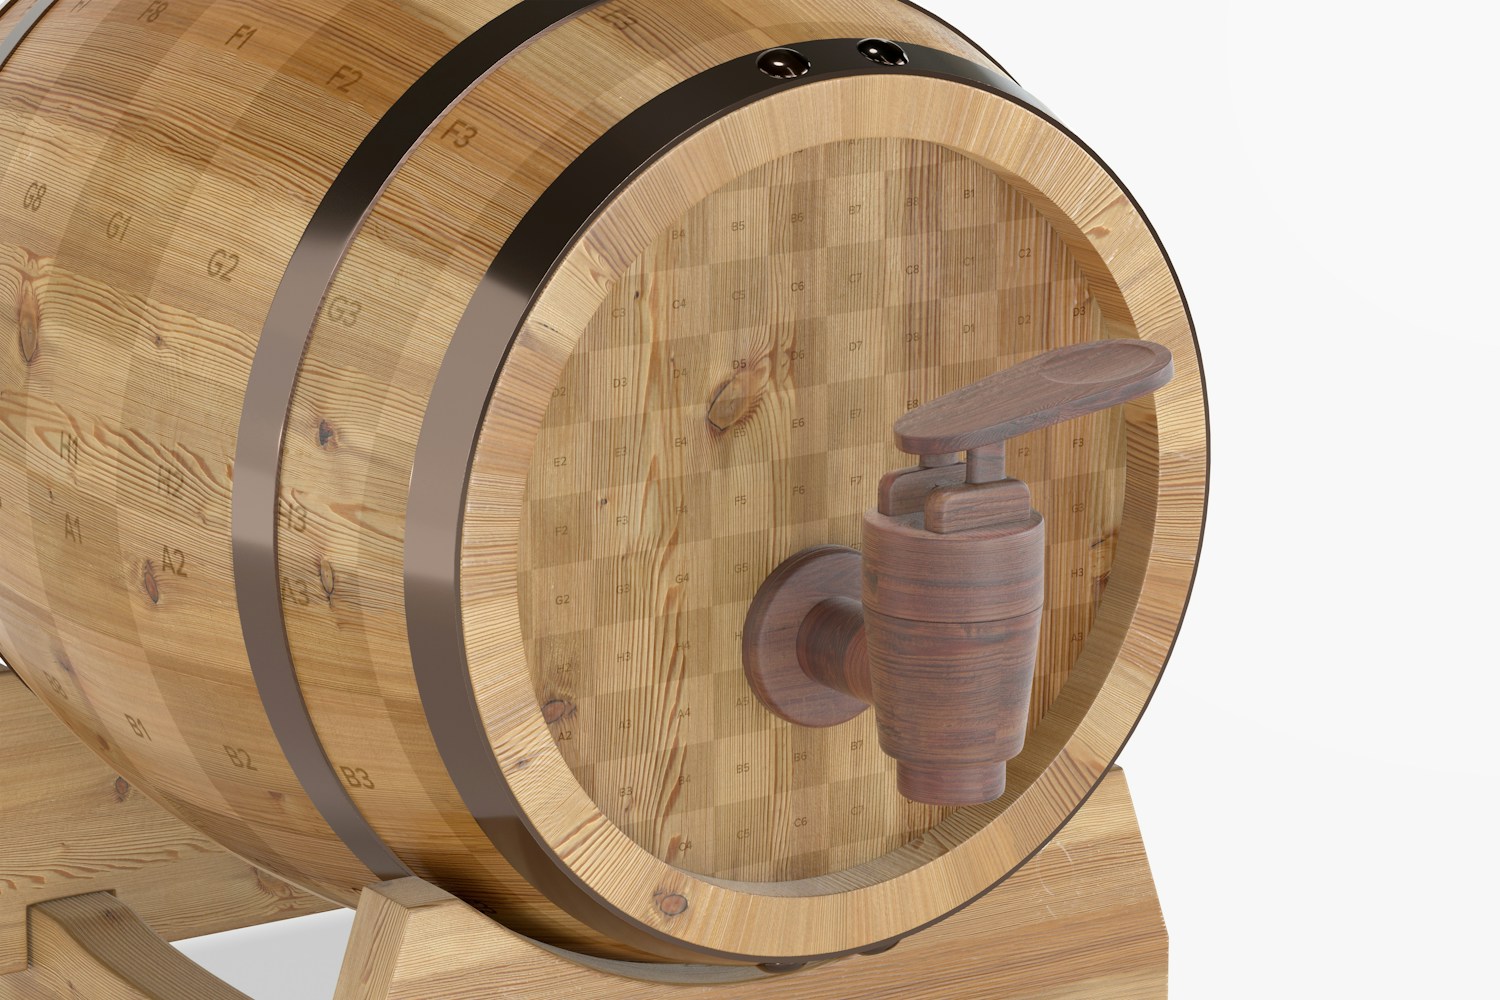 Wooden Barrel on Stand Mockup, Close-Up